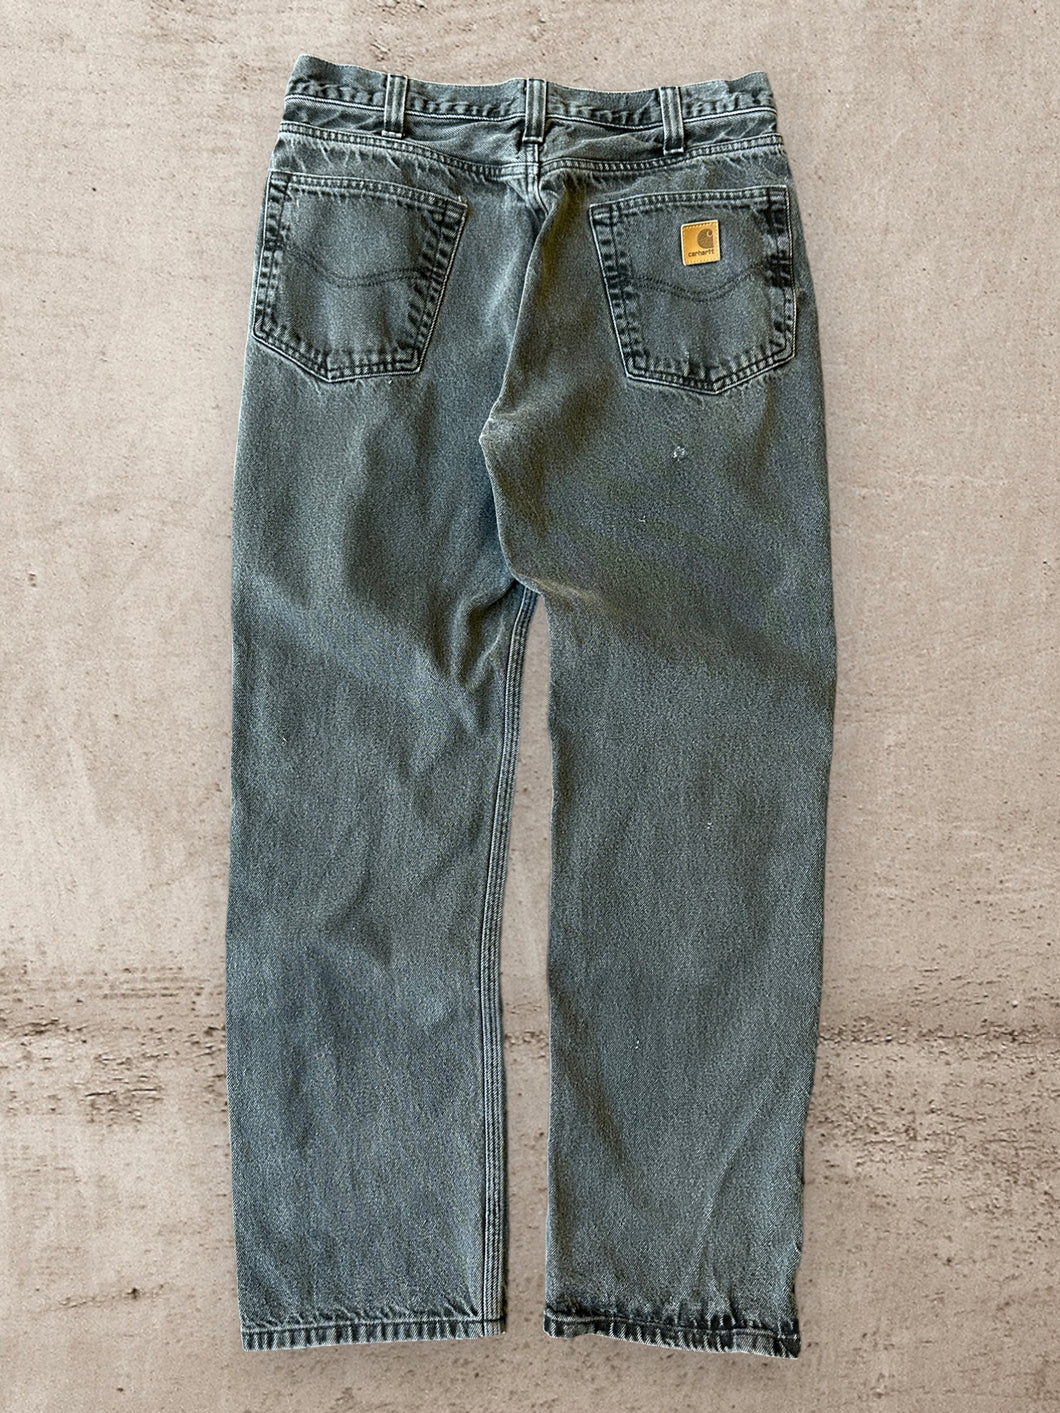 Vintage Carhartt Faded Black Jeans - 34x30